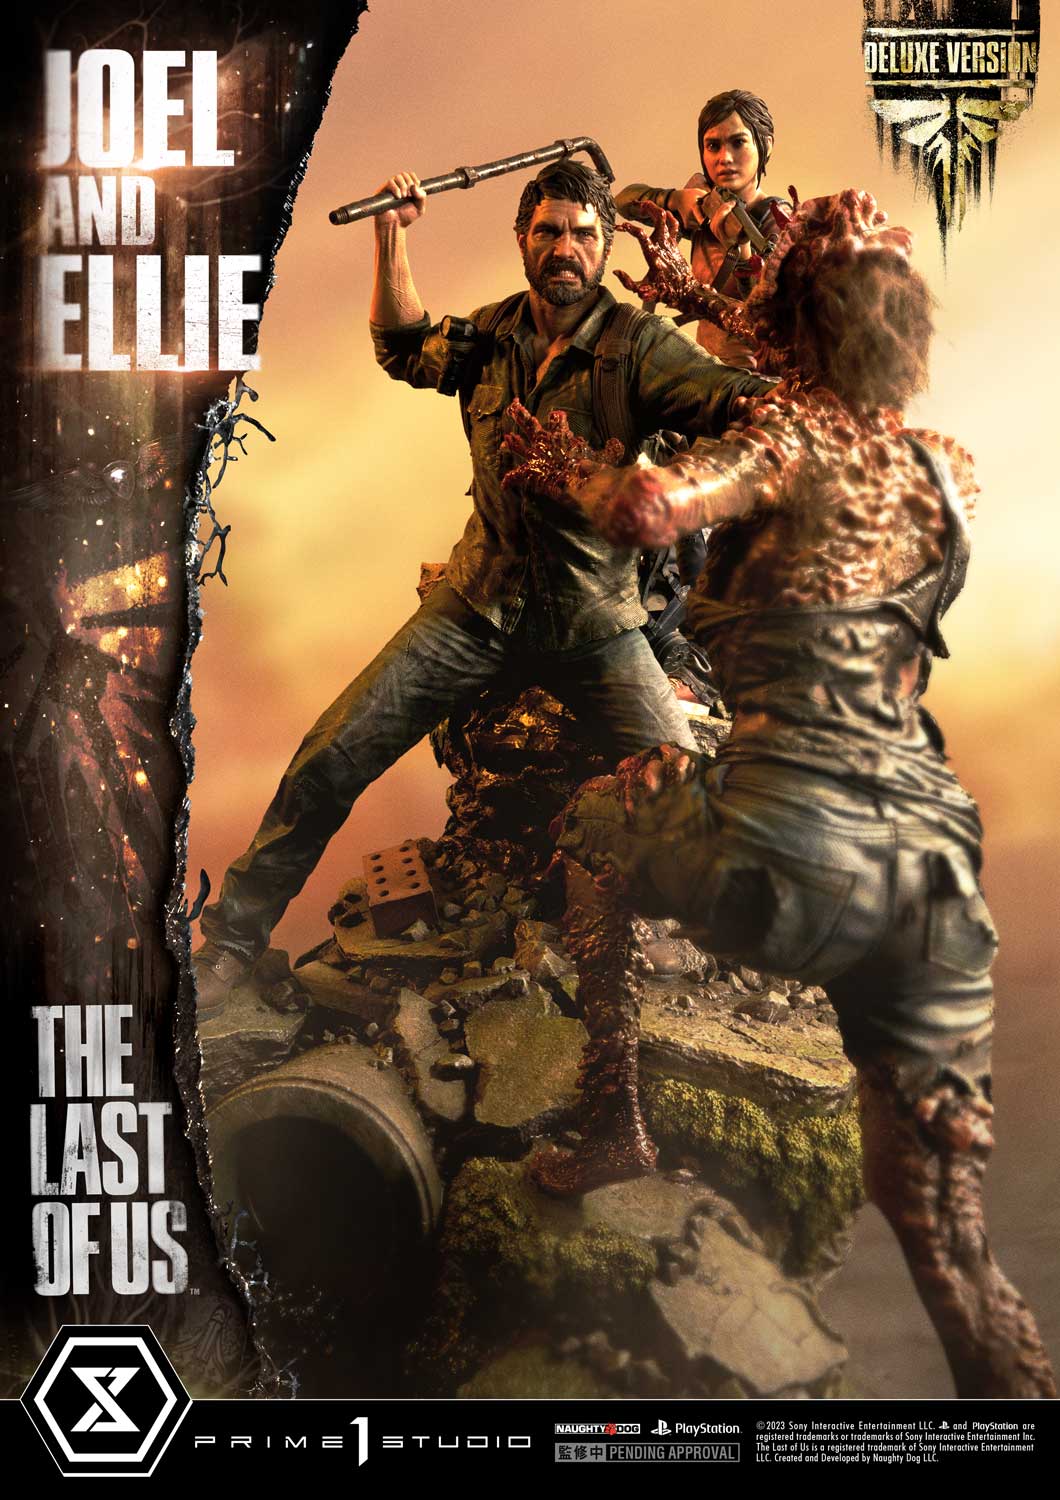 Ultimate Premium Masterline The Last Of Us PartⅠJoel & Ellie DX